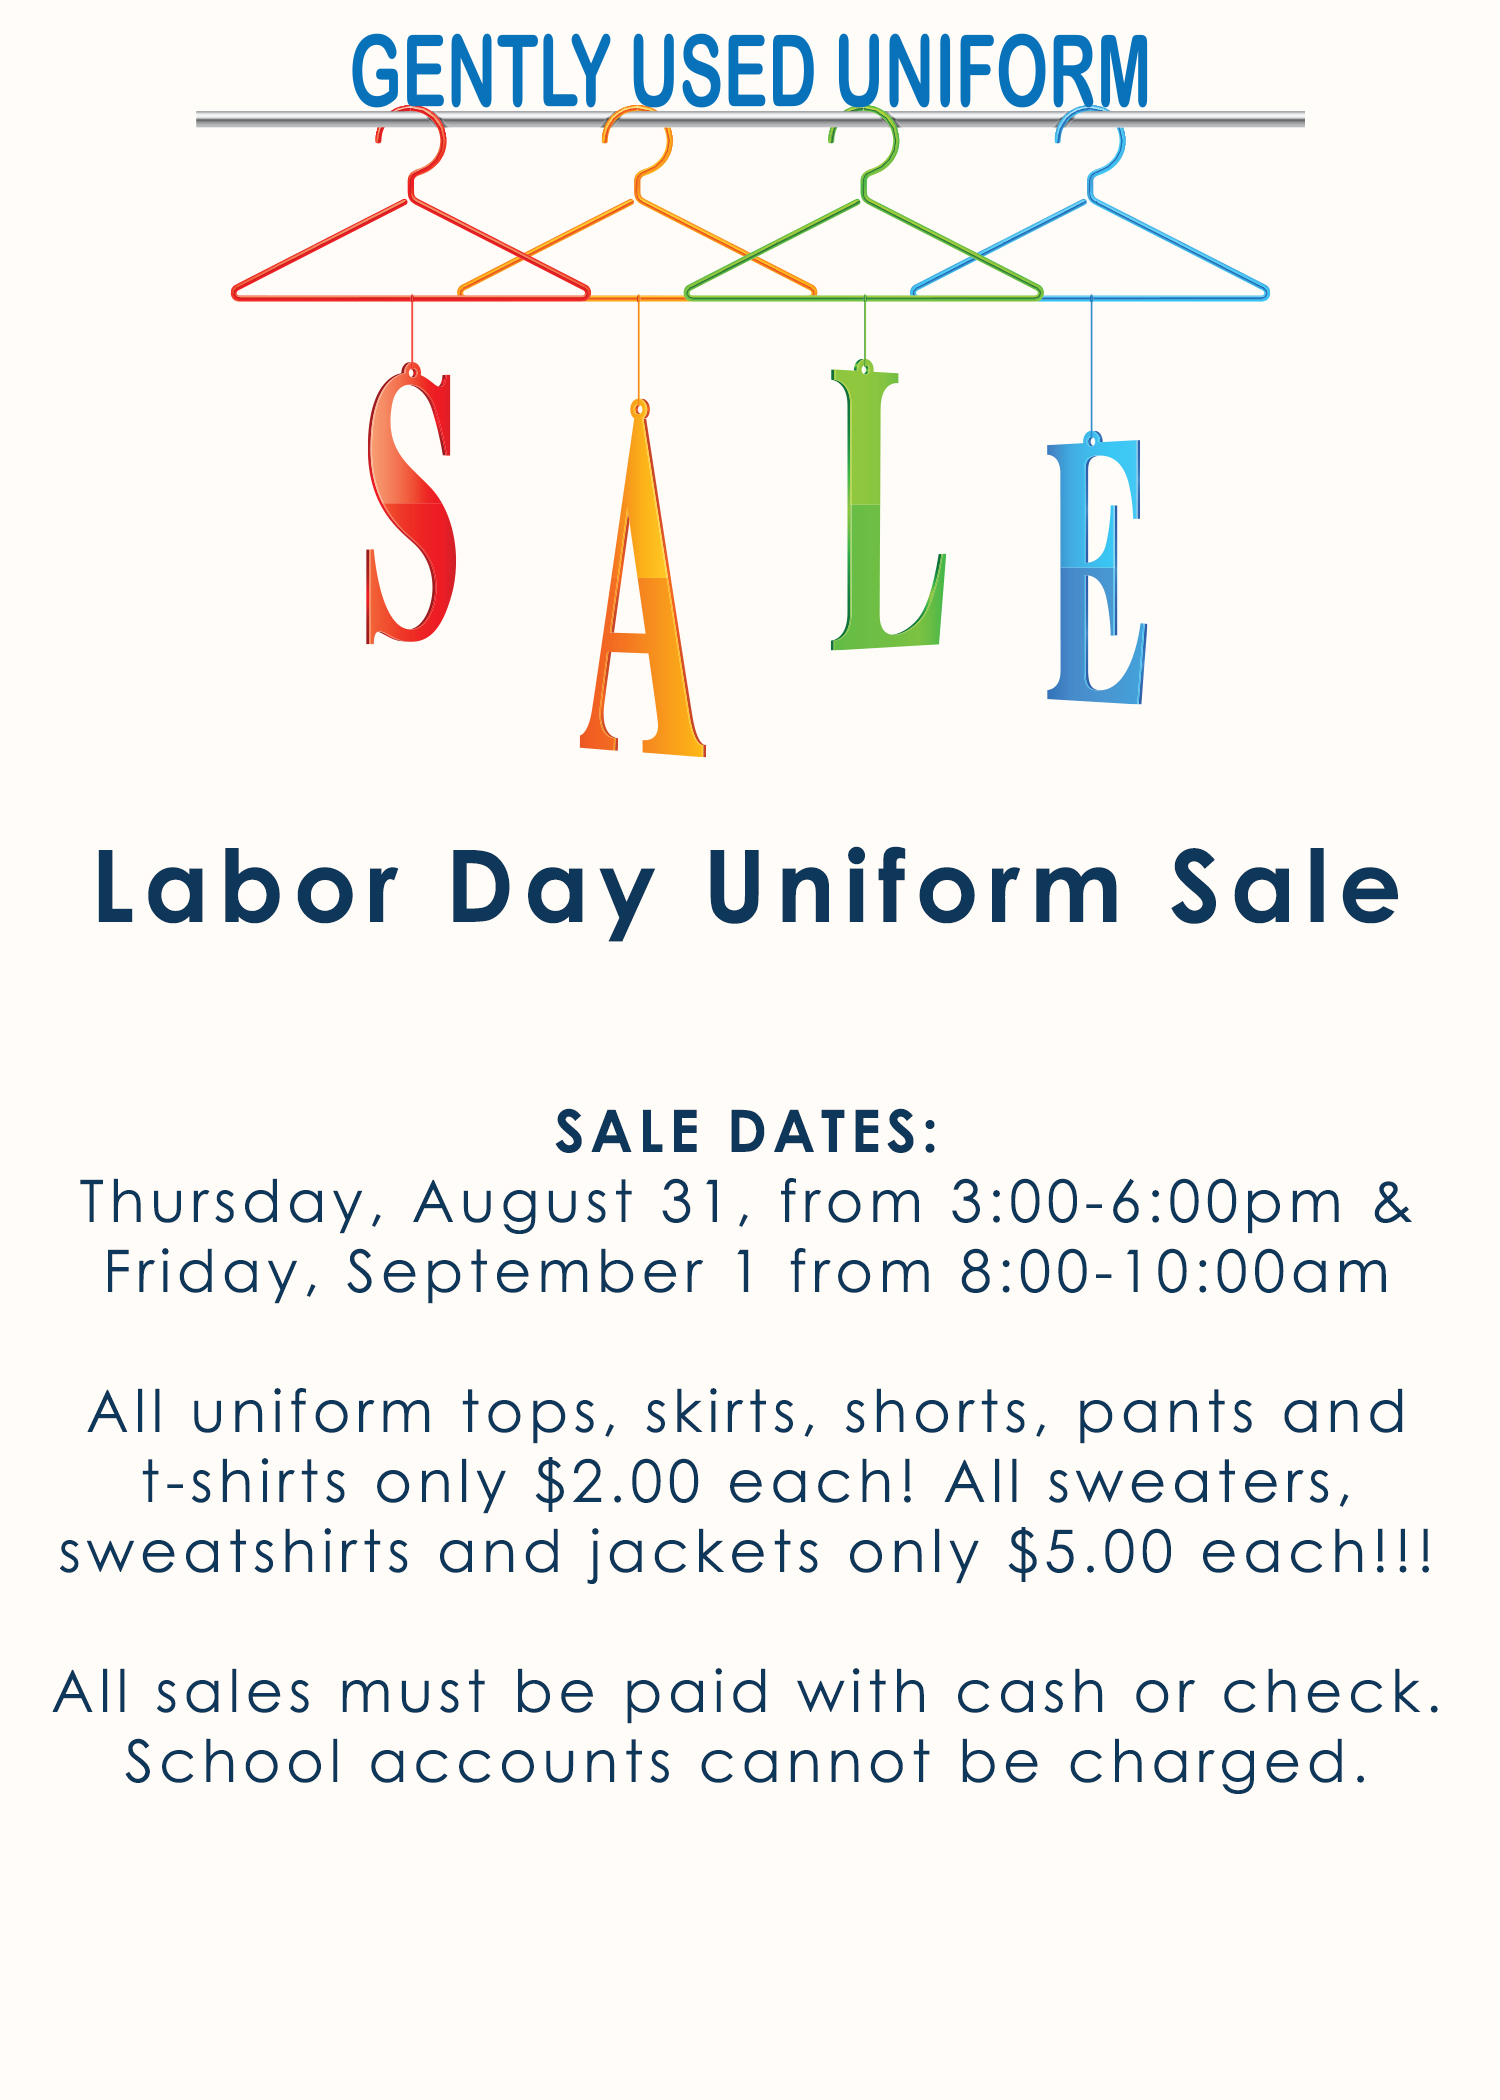 Gently Used Uniform Labor Day Sale - Prince Avenue Christian School